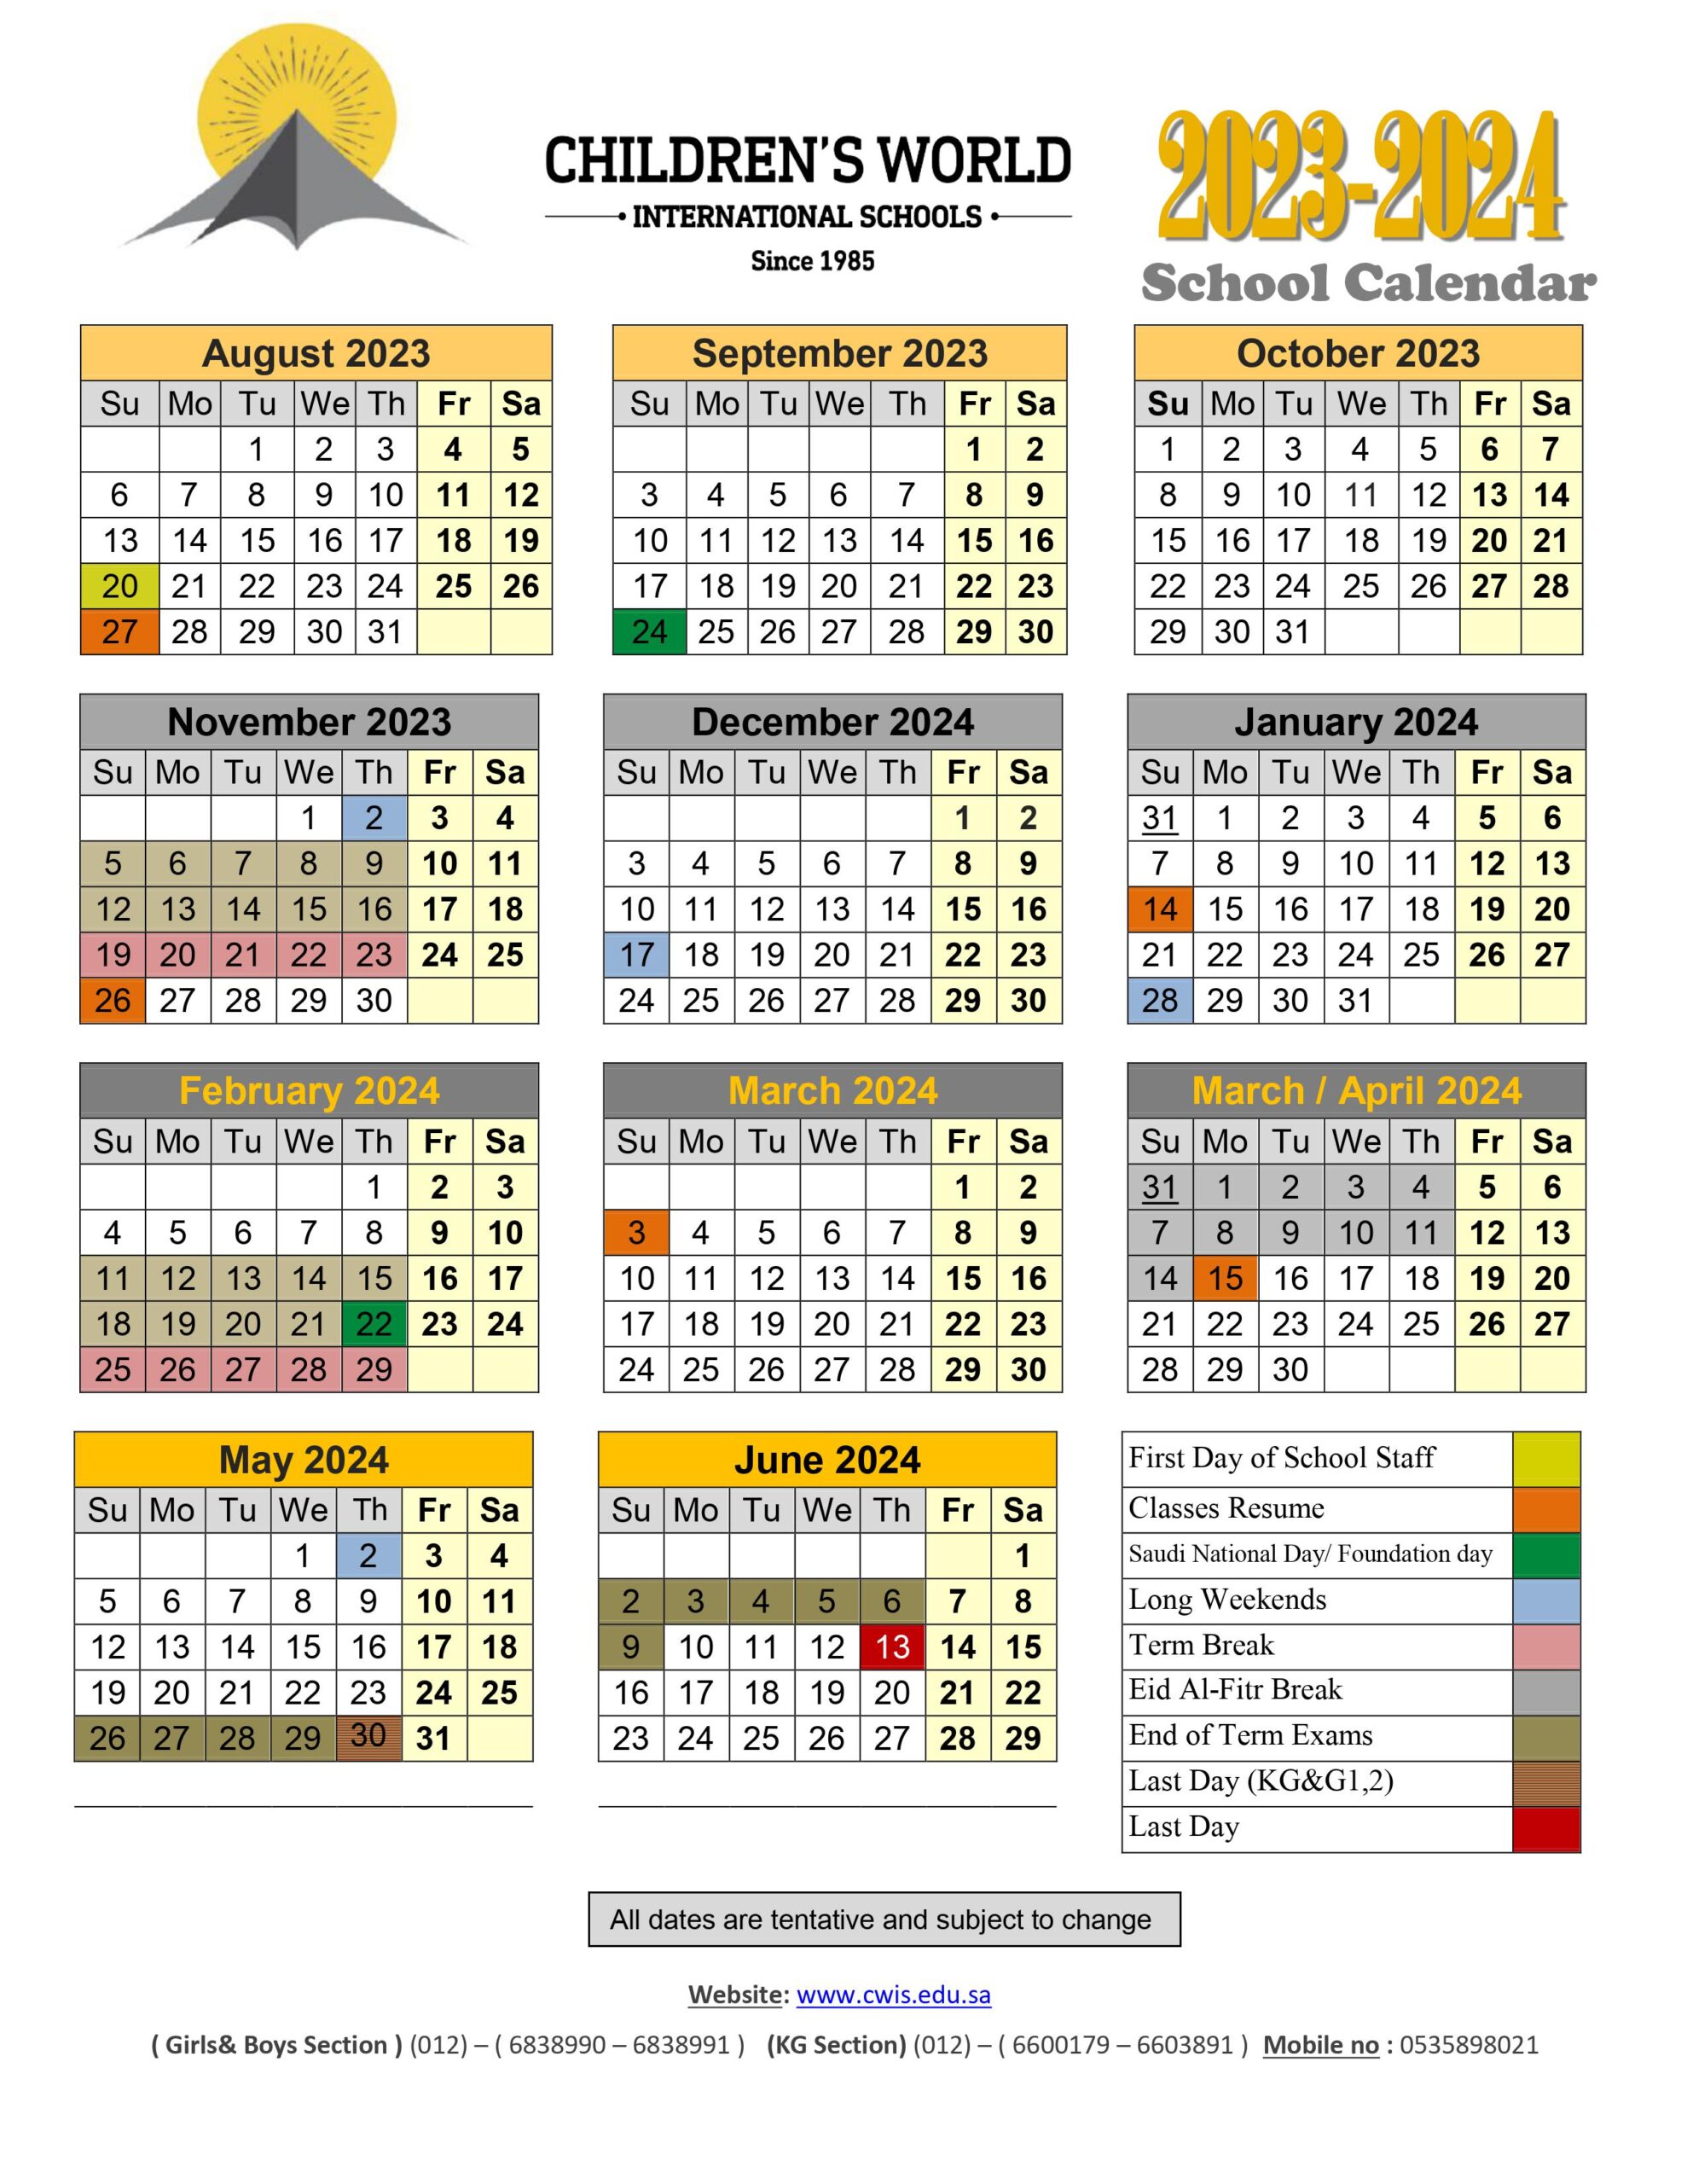 CWIS School Calendar 2023 2024 2 Scaled 